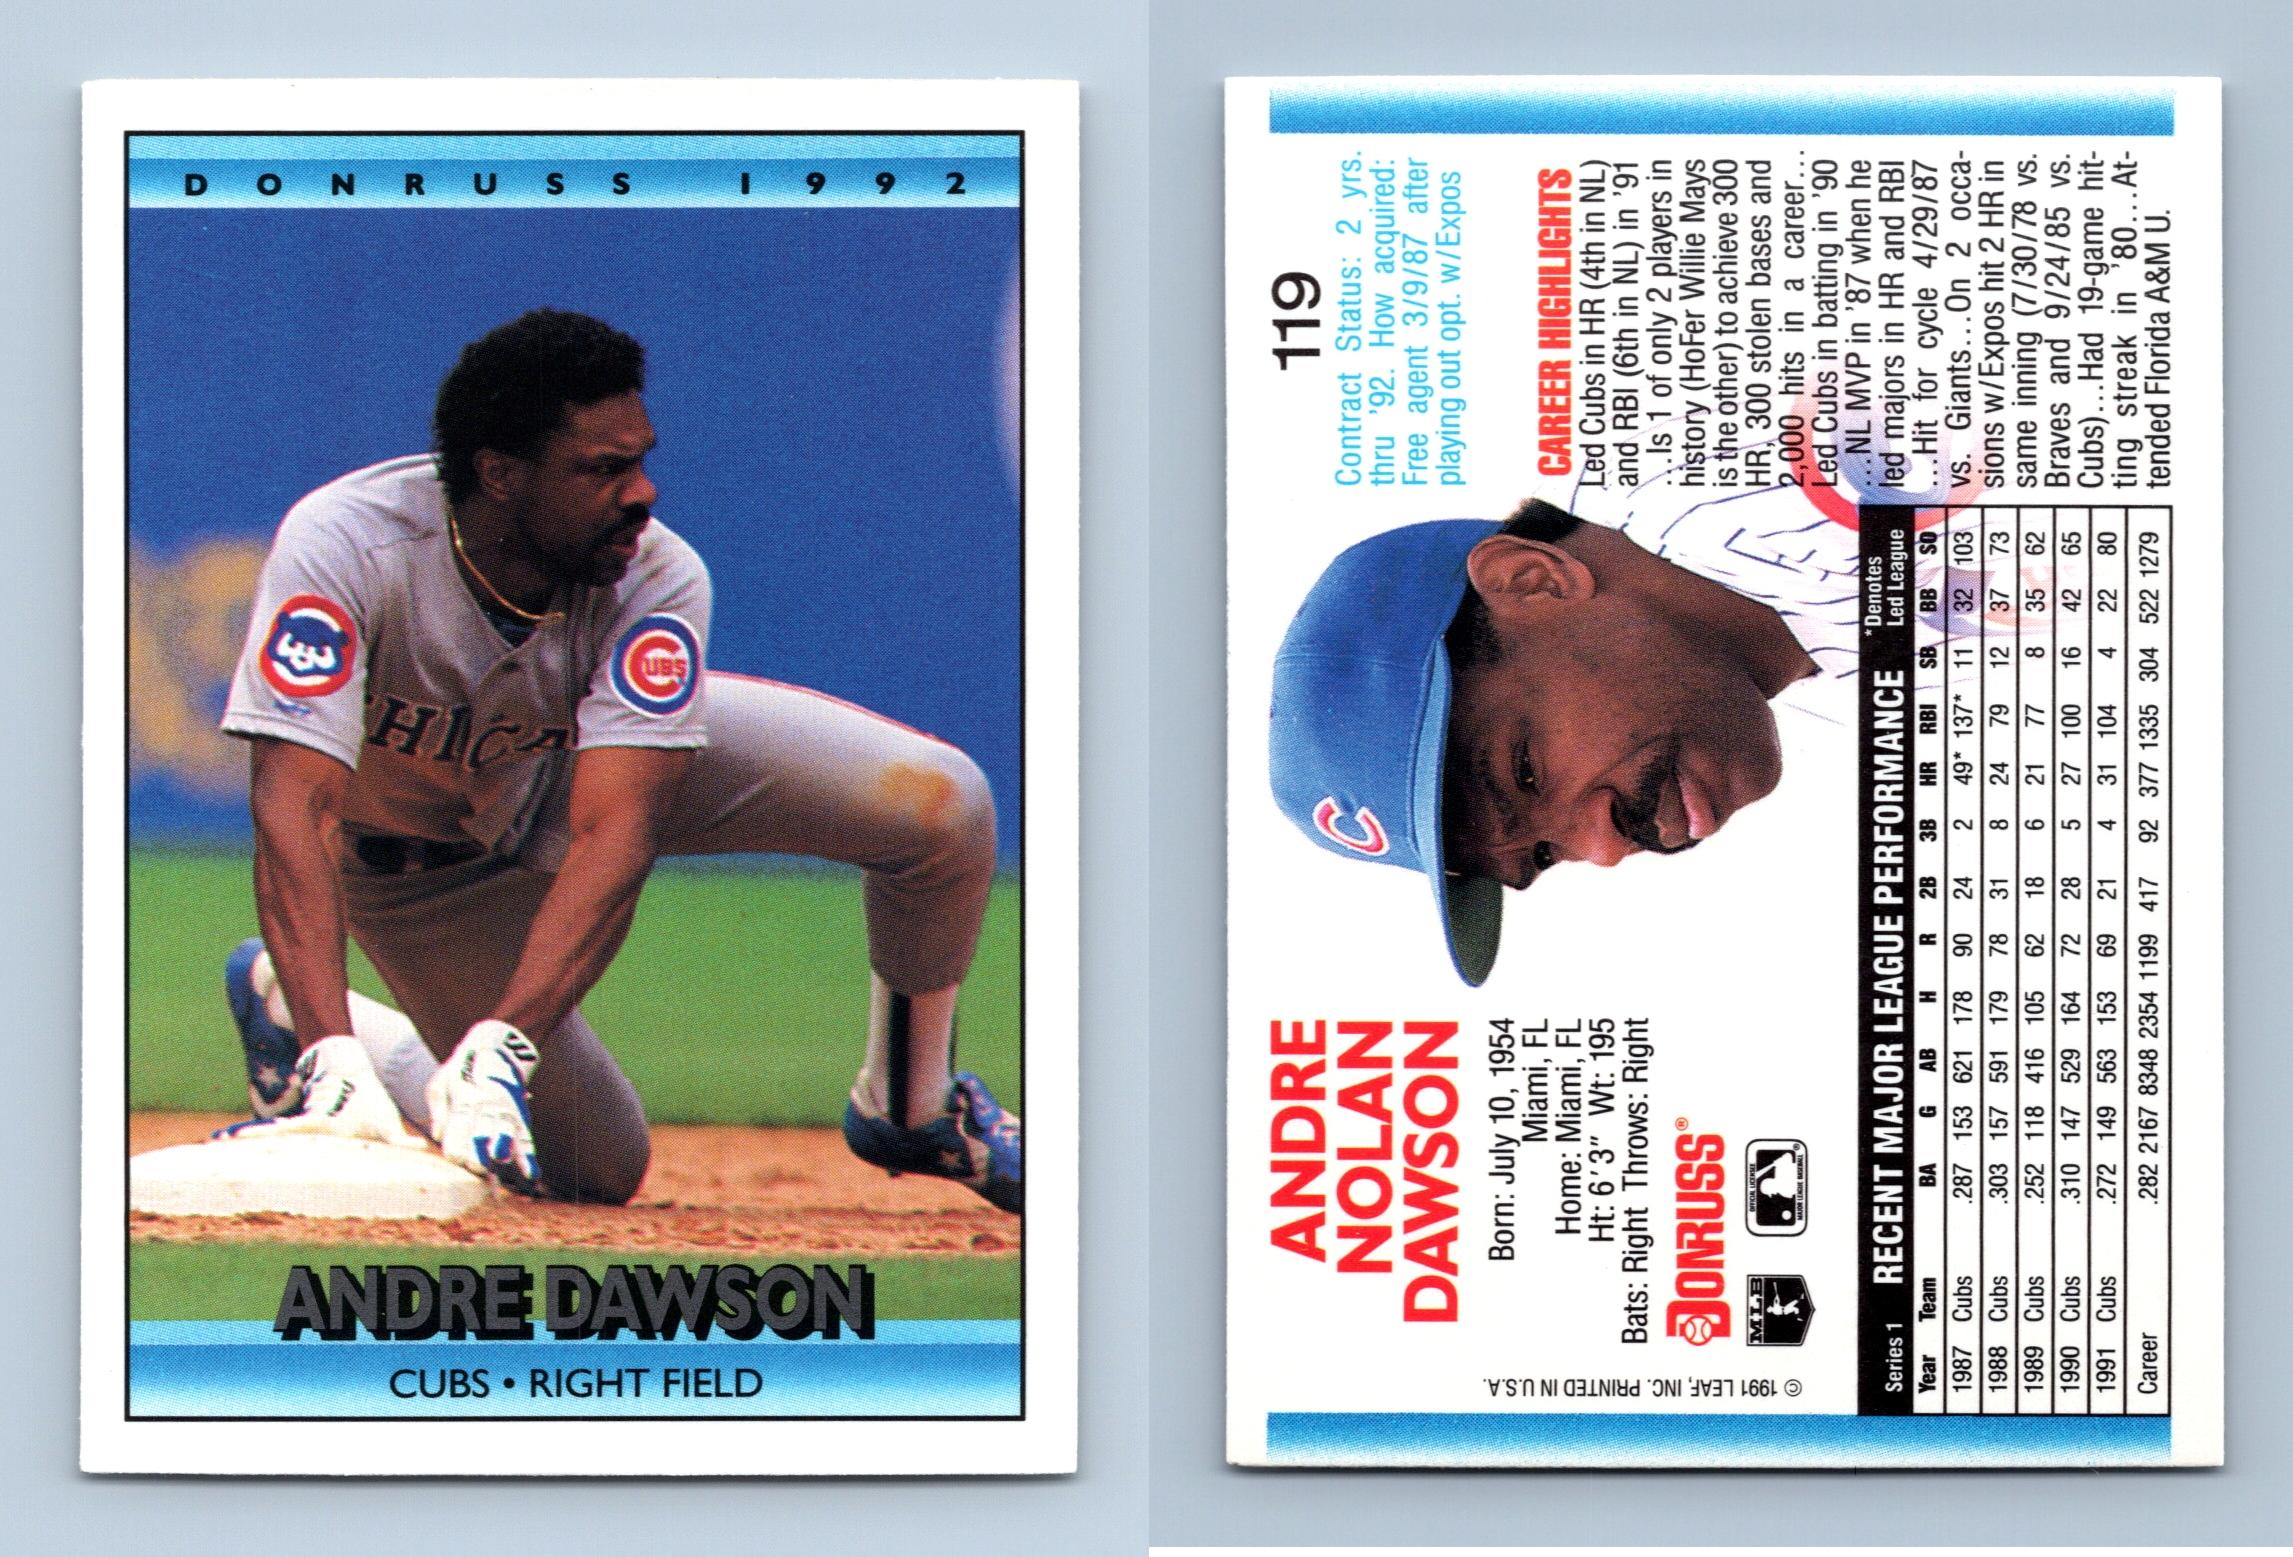 Todd Hundley - Mets #568 Donruss 1992 Baseball Trading Card